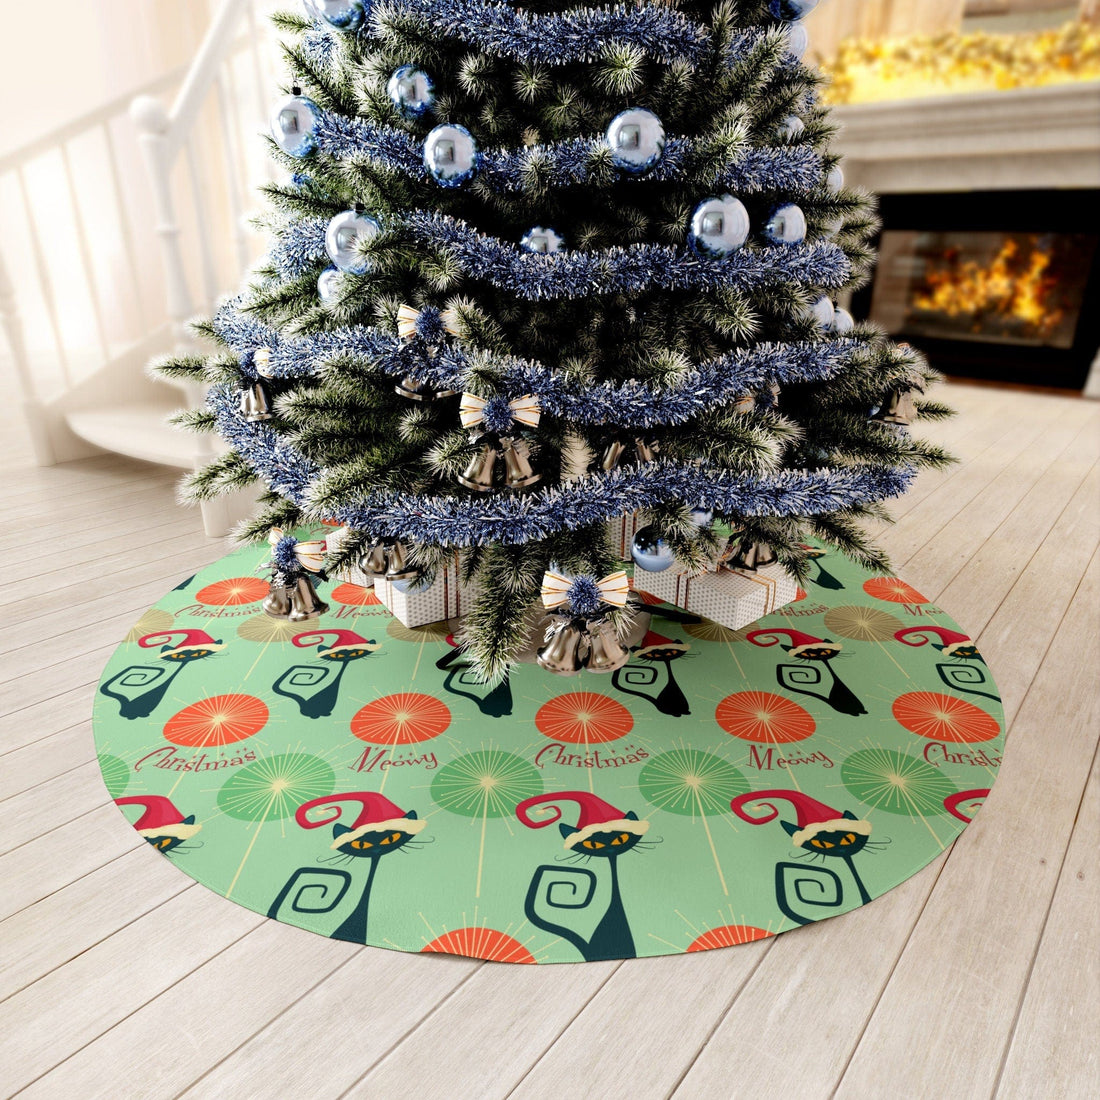 Kate McEnroe New York Atomic Cat MCM Meowy Christmas Round Tree Skirt, 1970s Mid Century Modern Retro Starburst Christmas DecorChristmas Tree Skirts33269276671093200454